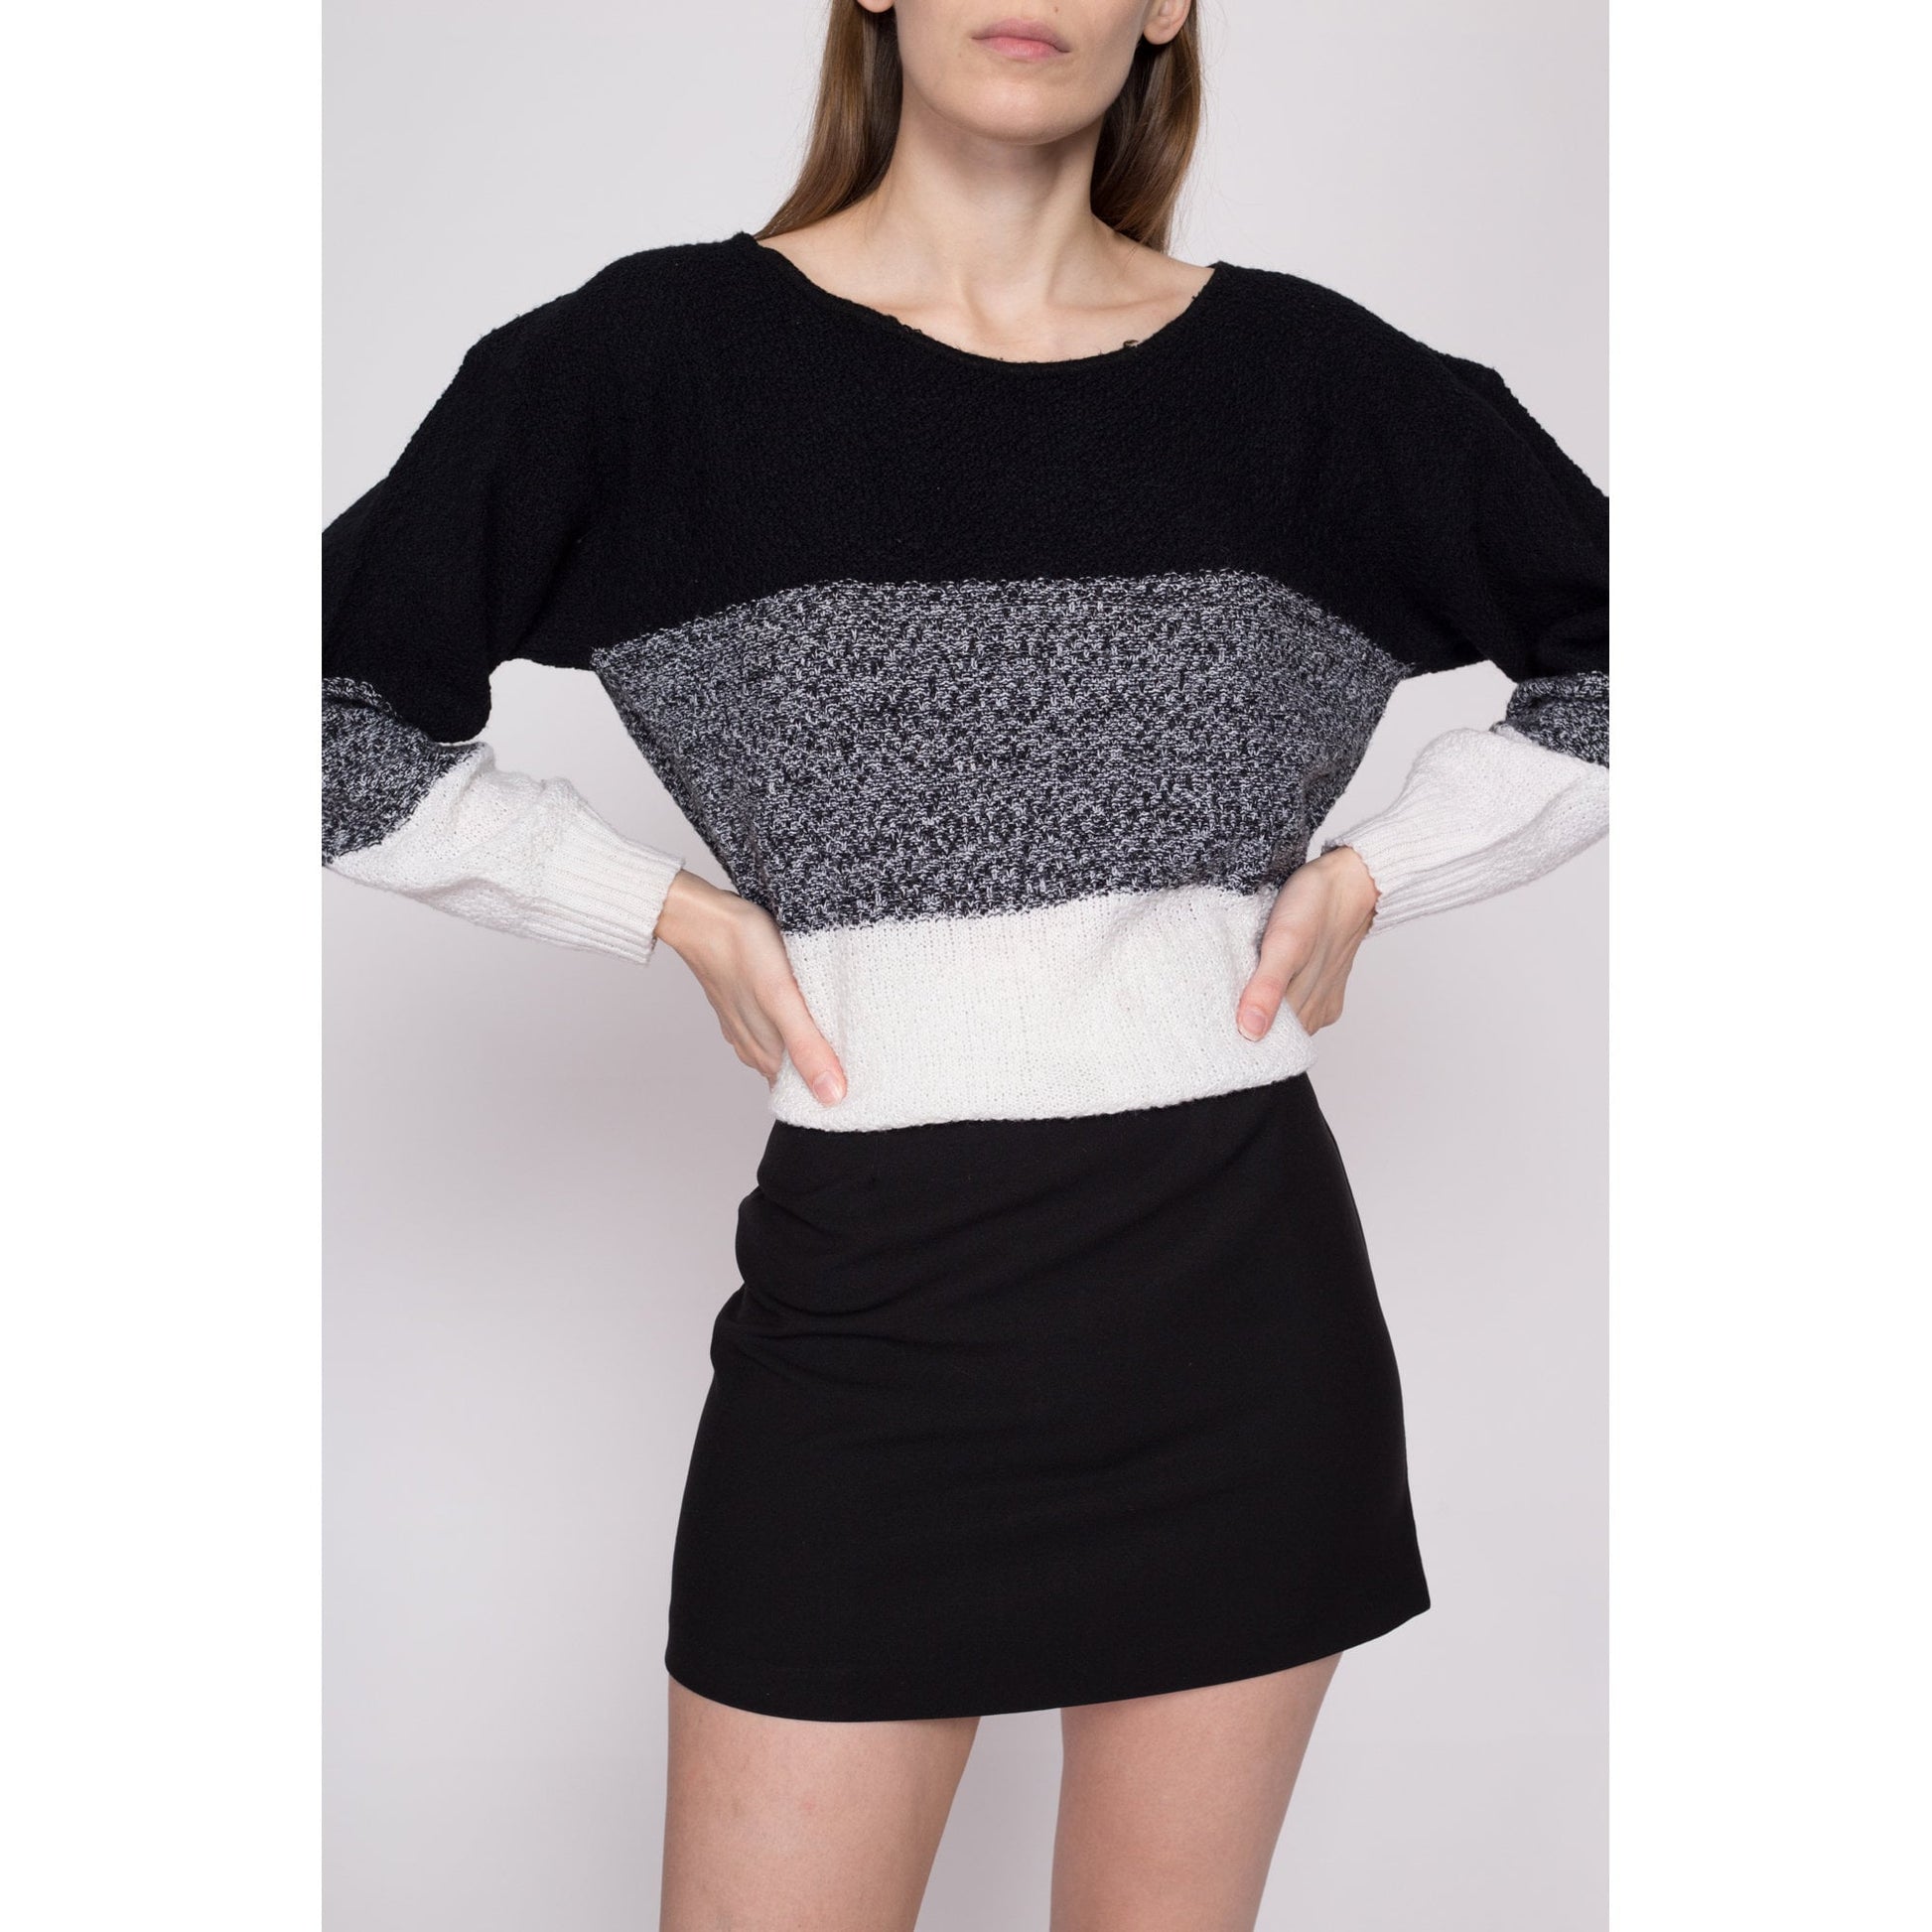 M| 80s Color Block Knit Sweater - Medium | Vintage Black White Gradient Striped Pullover